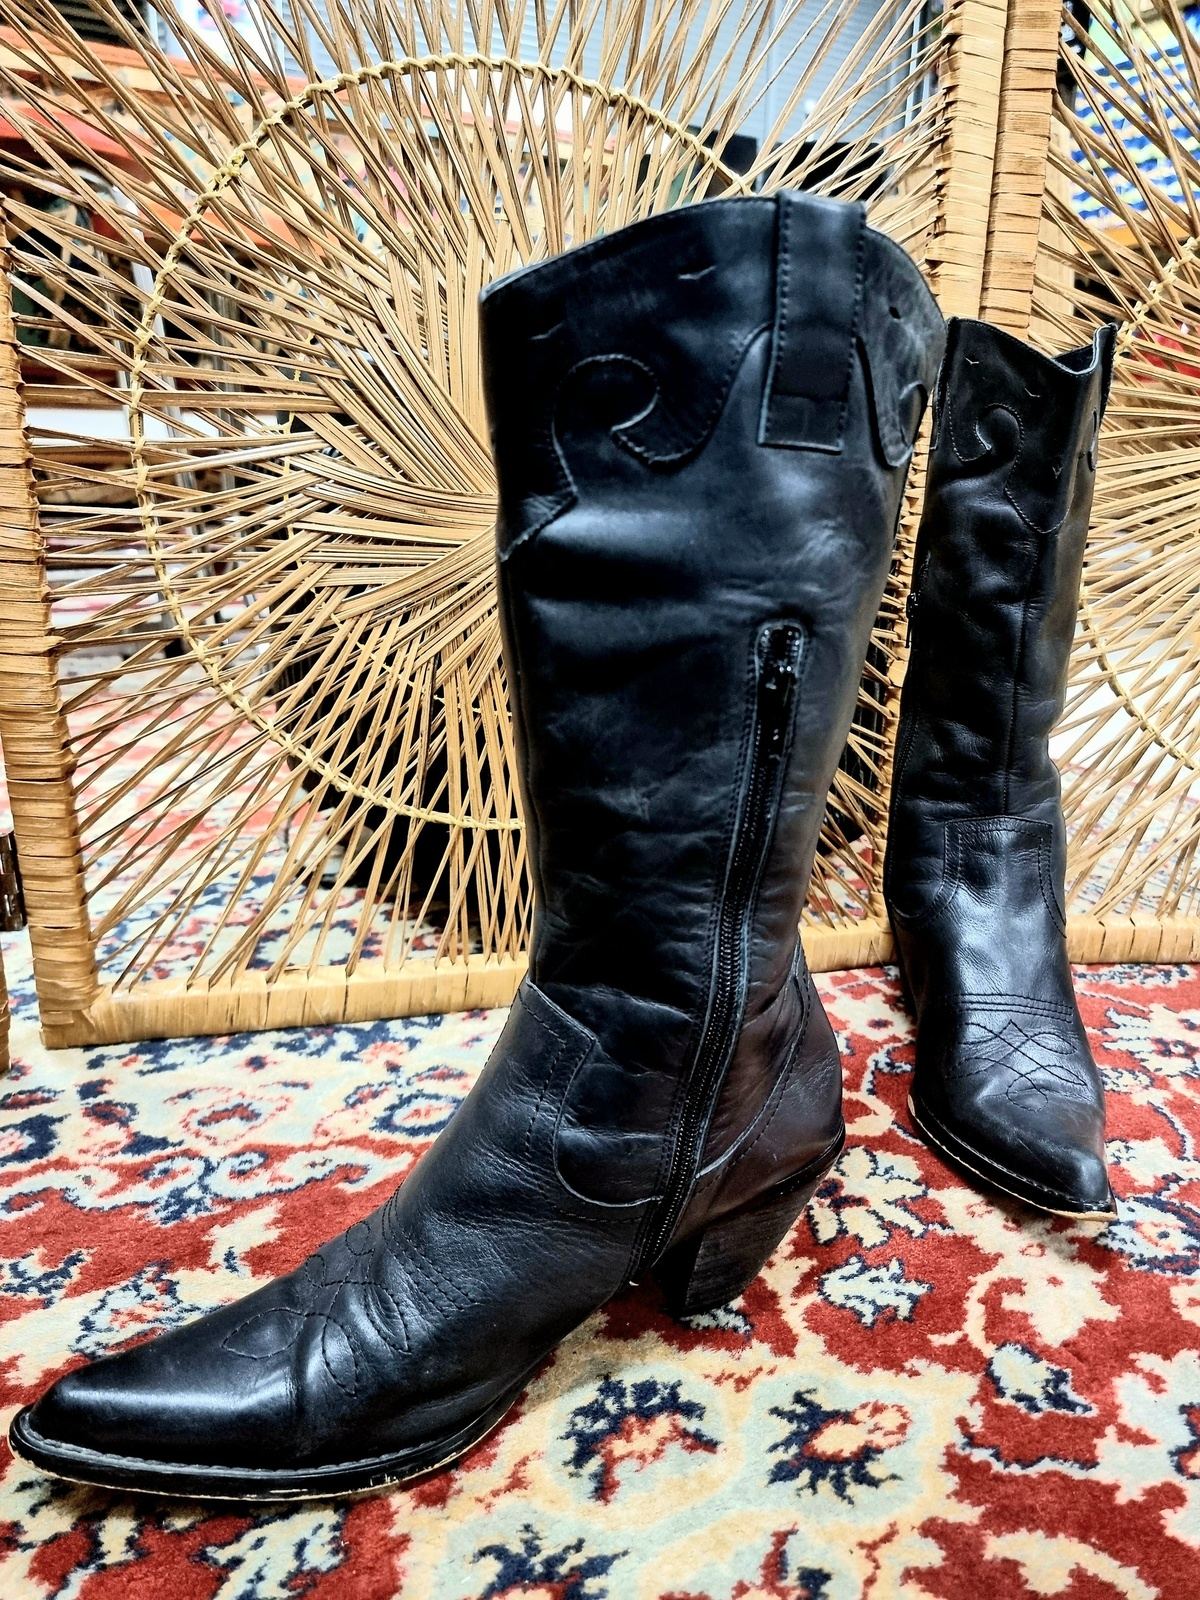 Vintage Cowboy boots